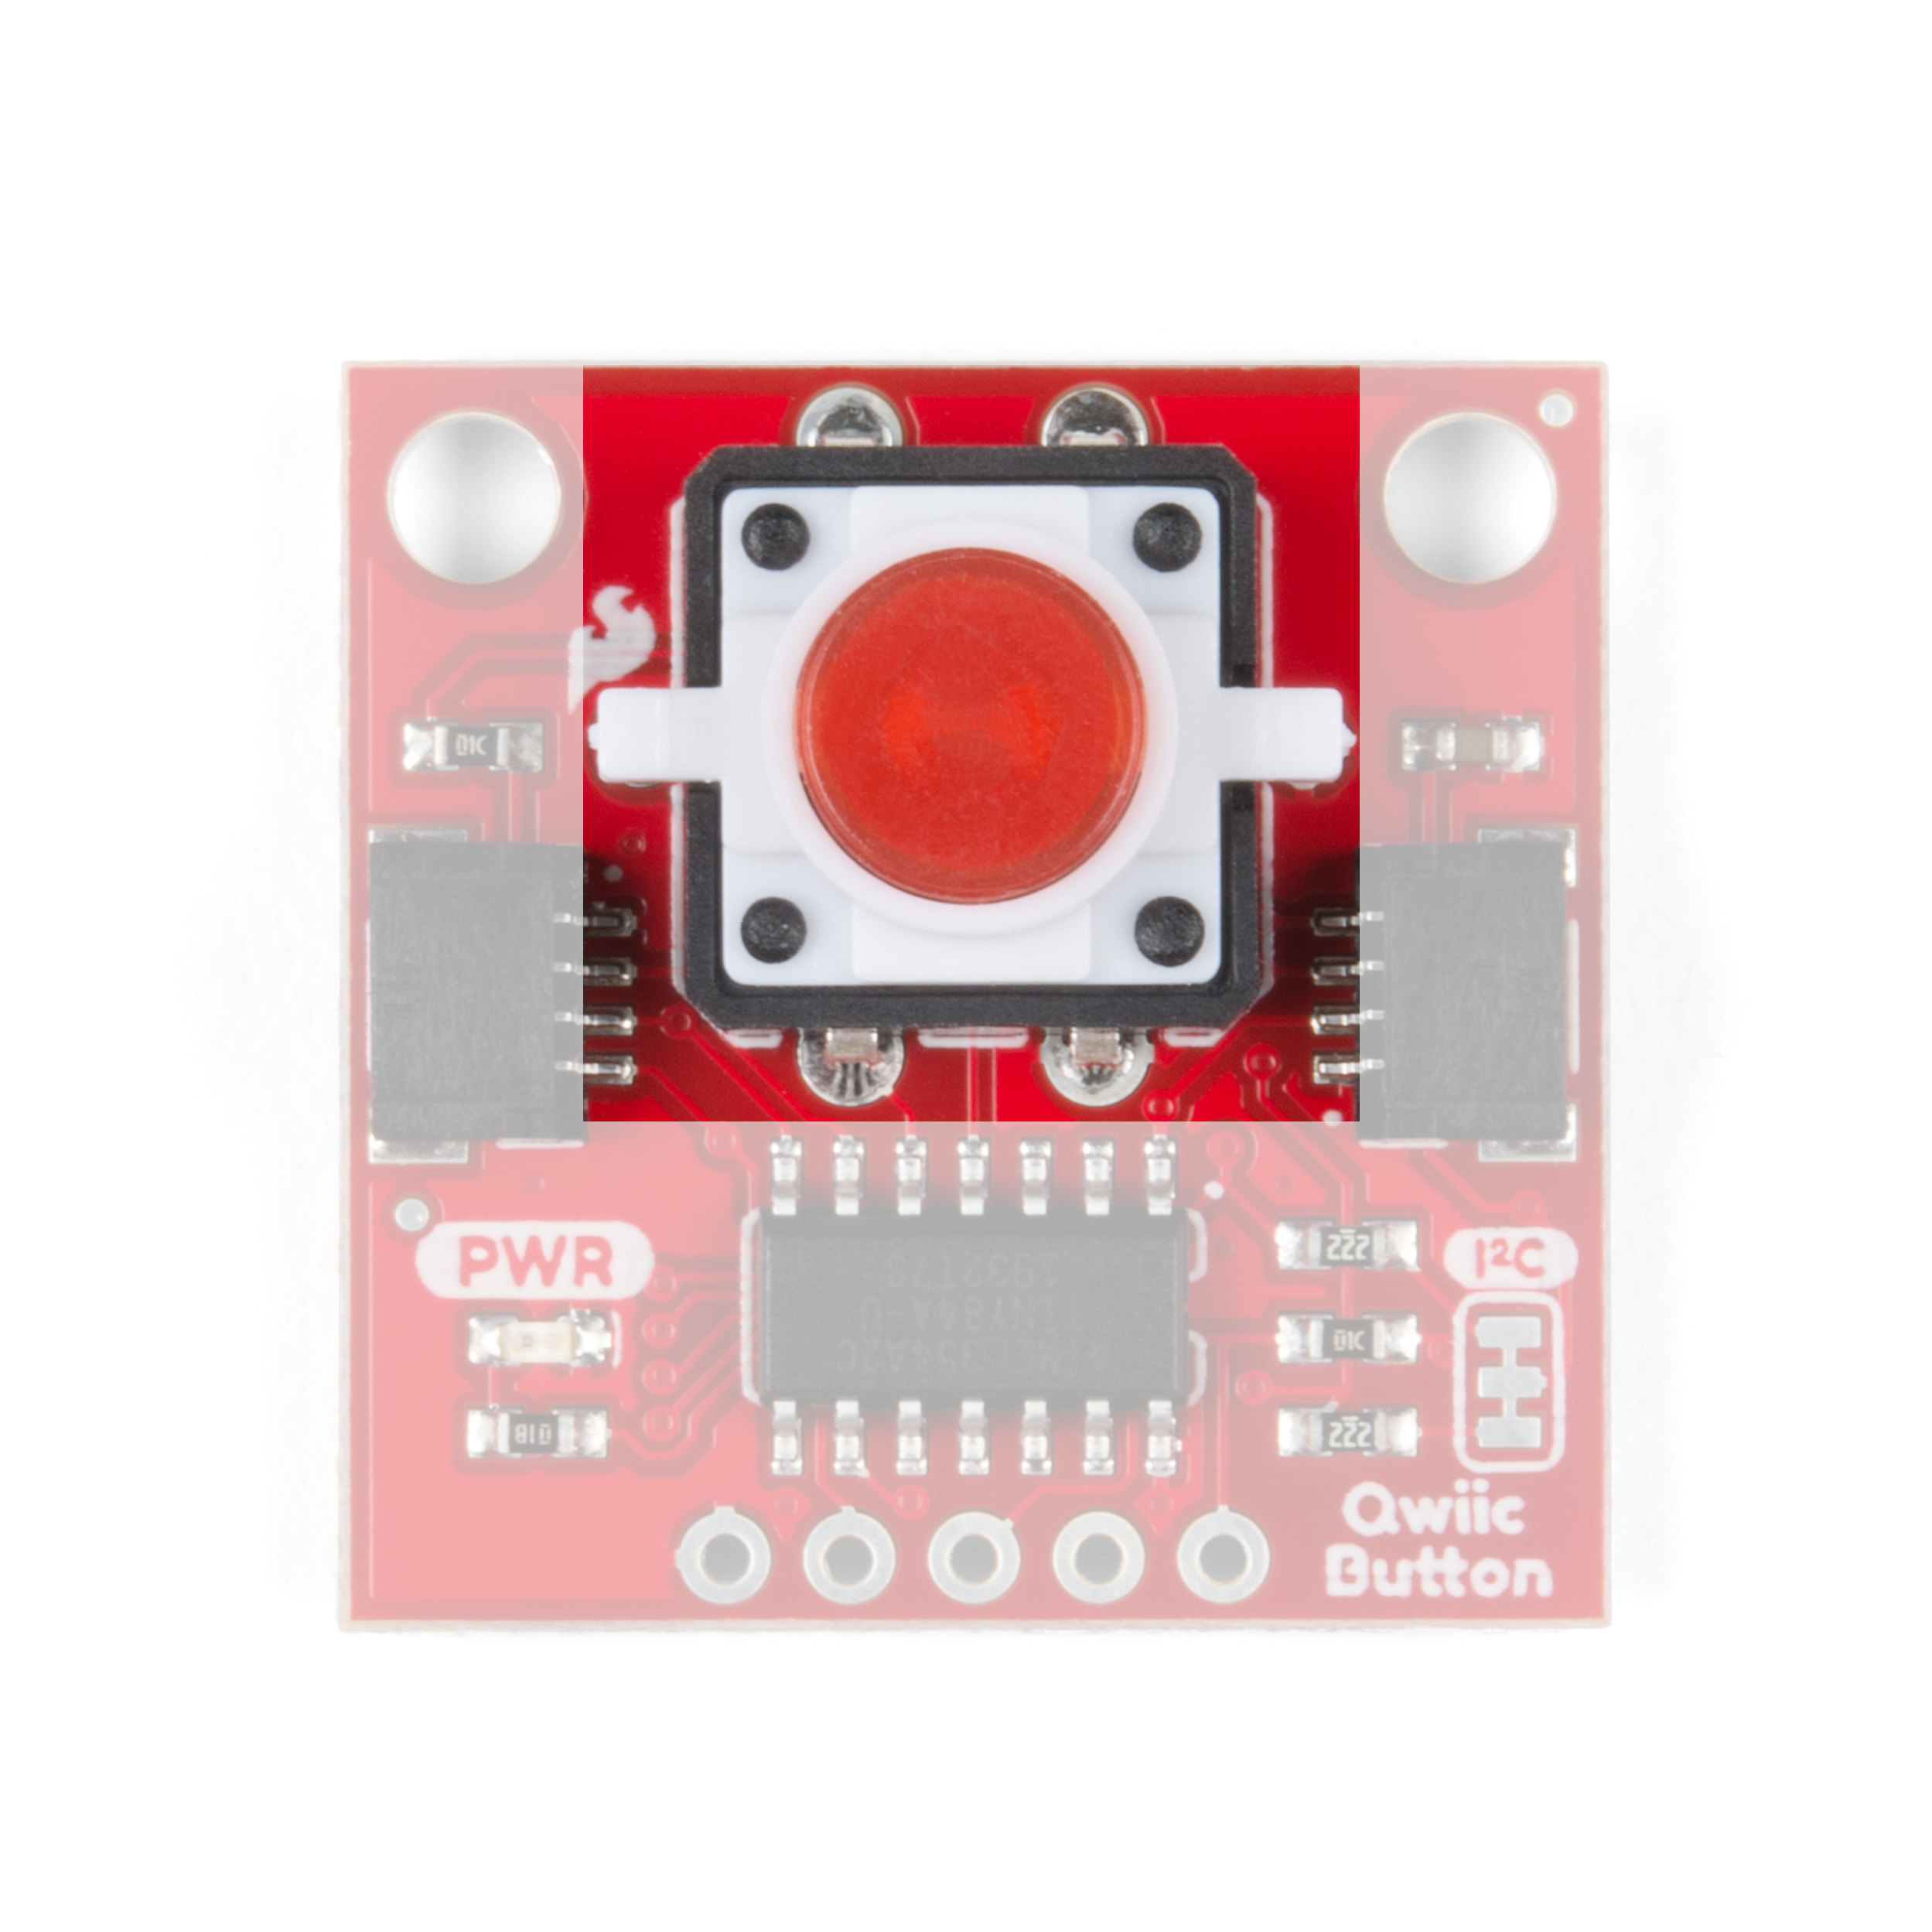 Qwiic Button Red LED - Modul mit einer Taste - rote LED - SparkFun